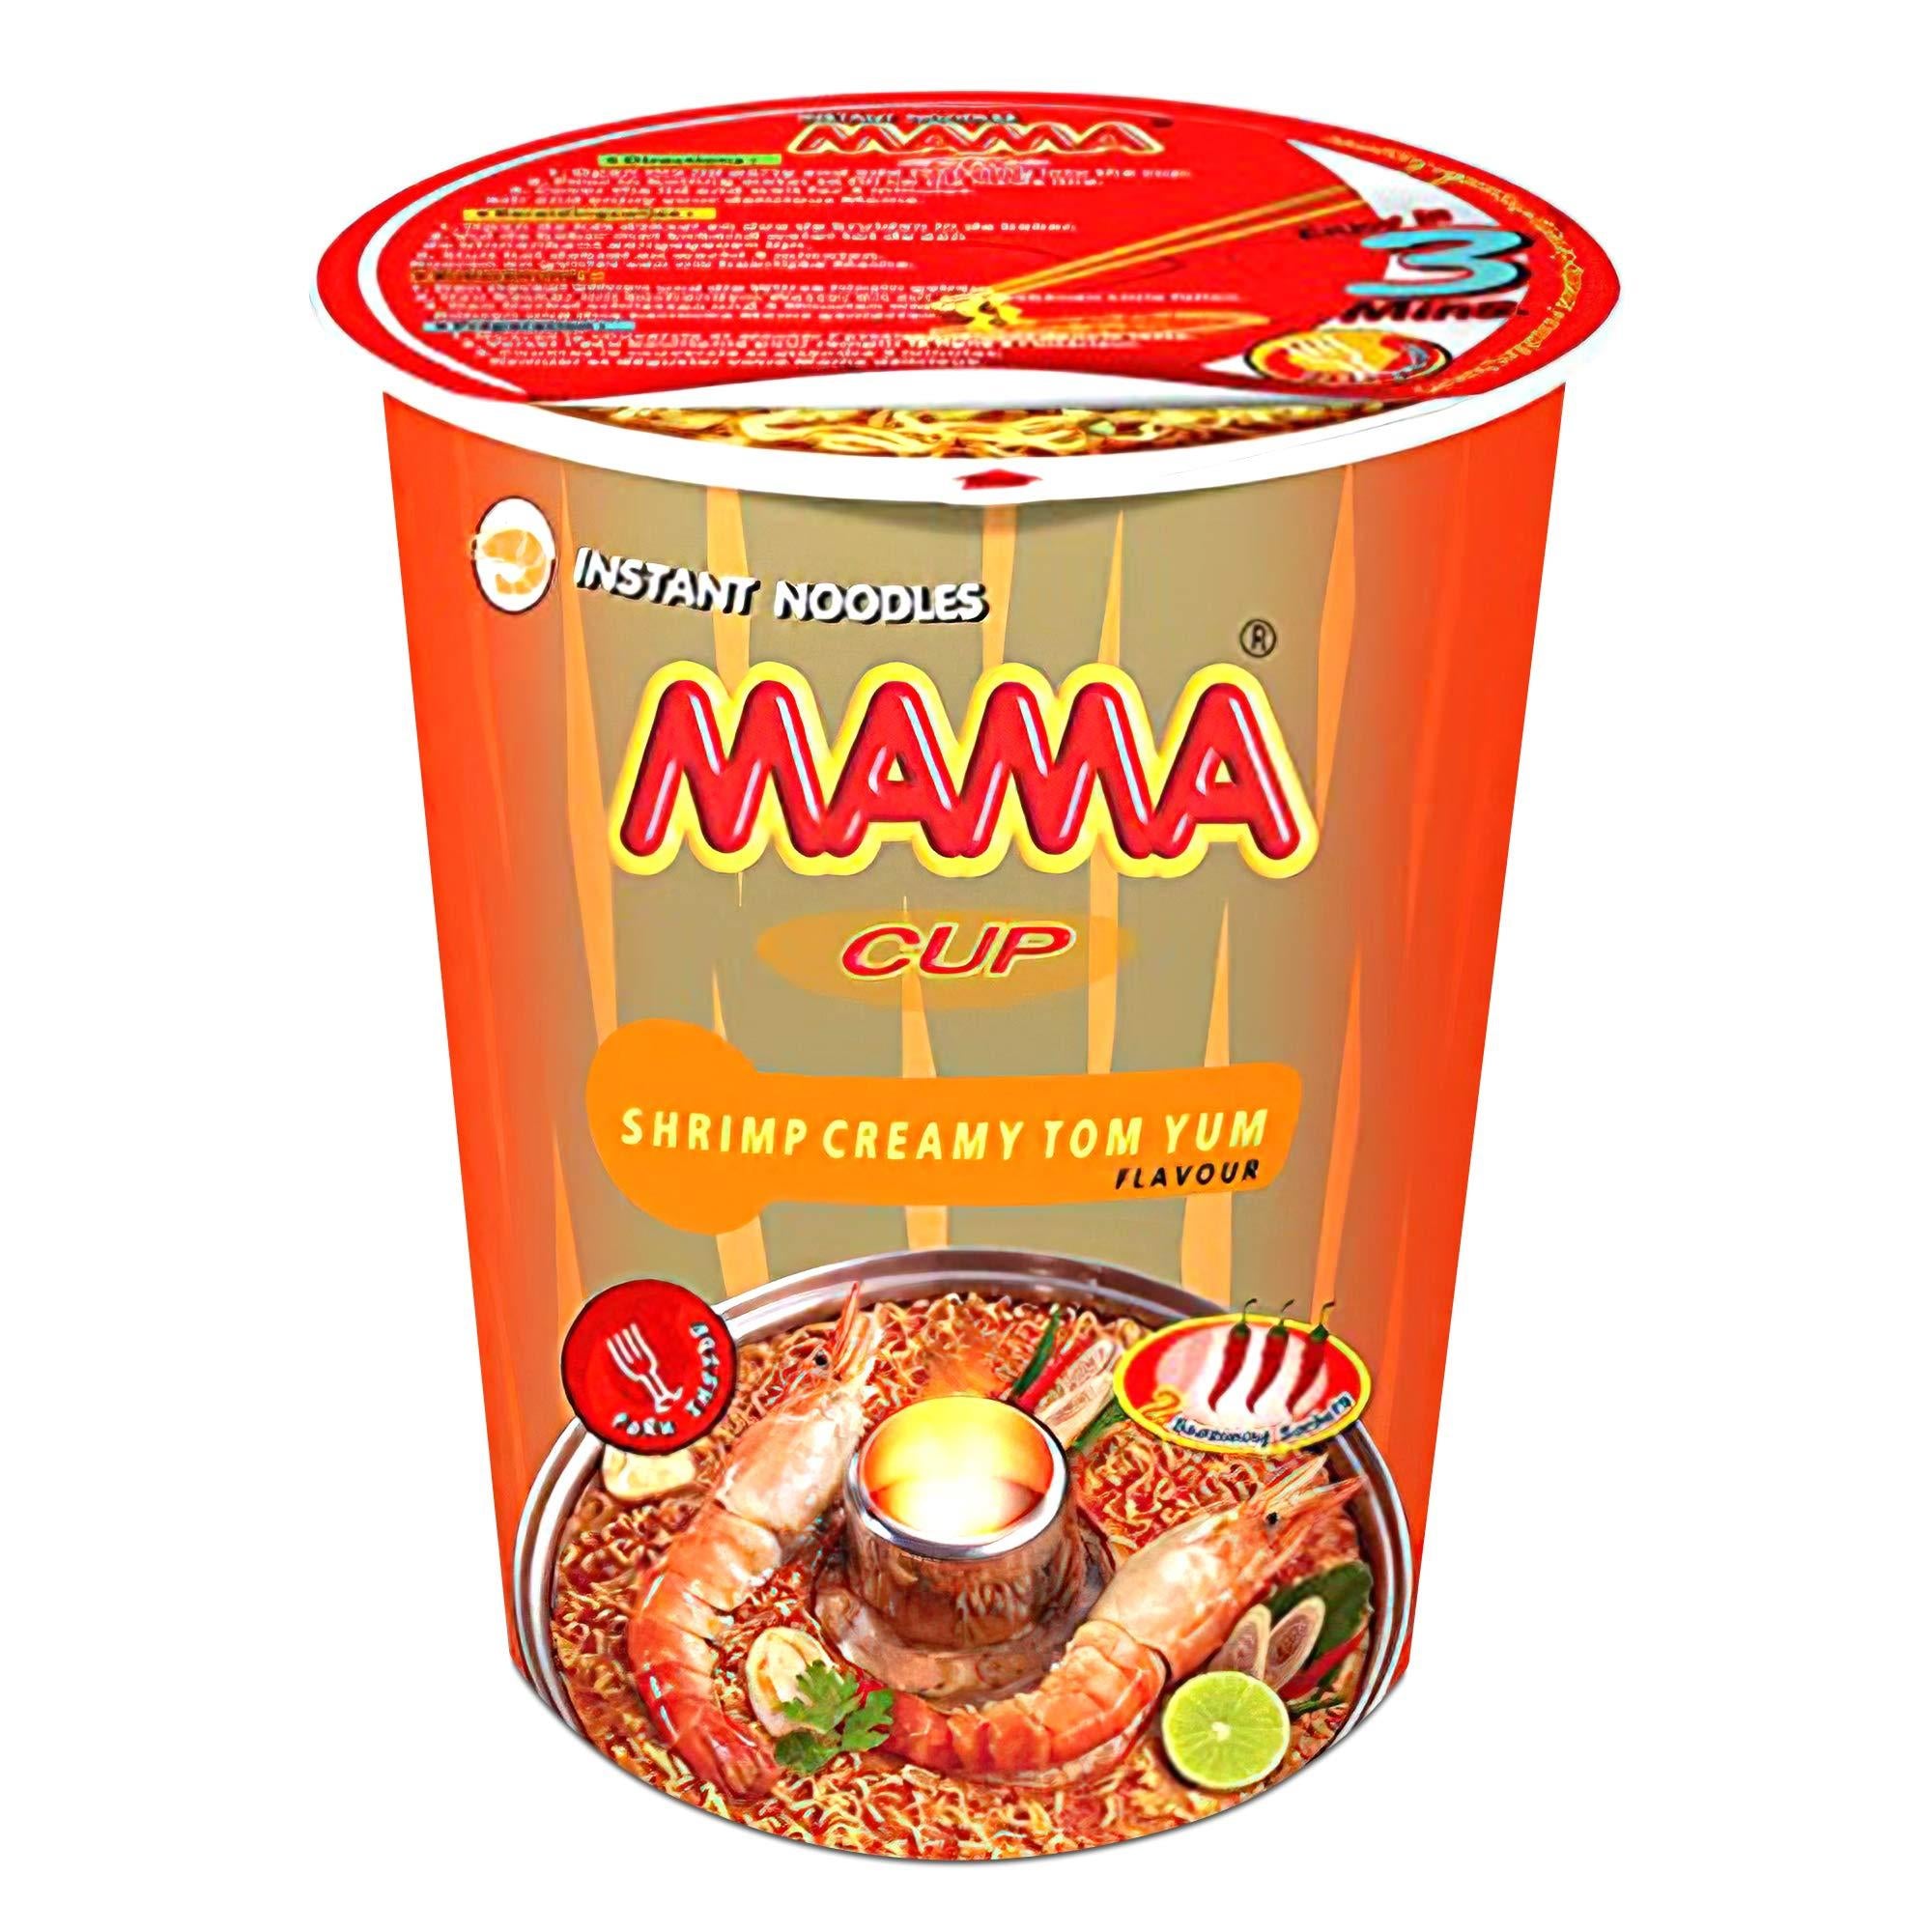 MAMA Creamy Shrimp Tom Yum Instant Cup Noodles w/ Delicious Thai Flavors, Hot & Spicy Noodles w/ Creamy Shrimp Tom Yum Soup Base, No Trans Fat 6 Pack